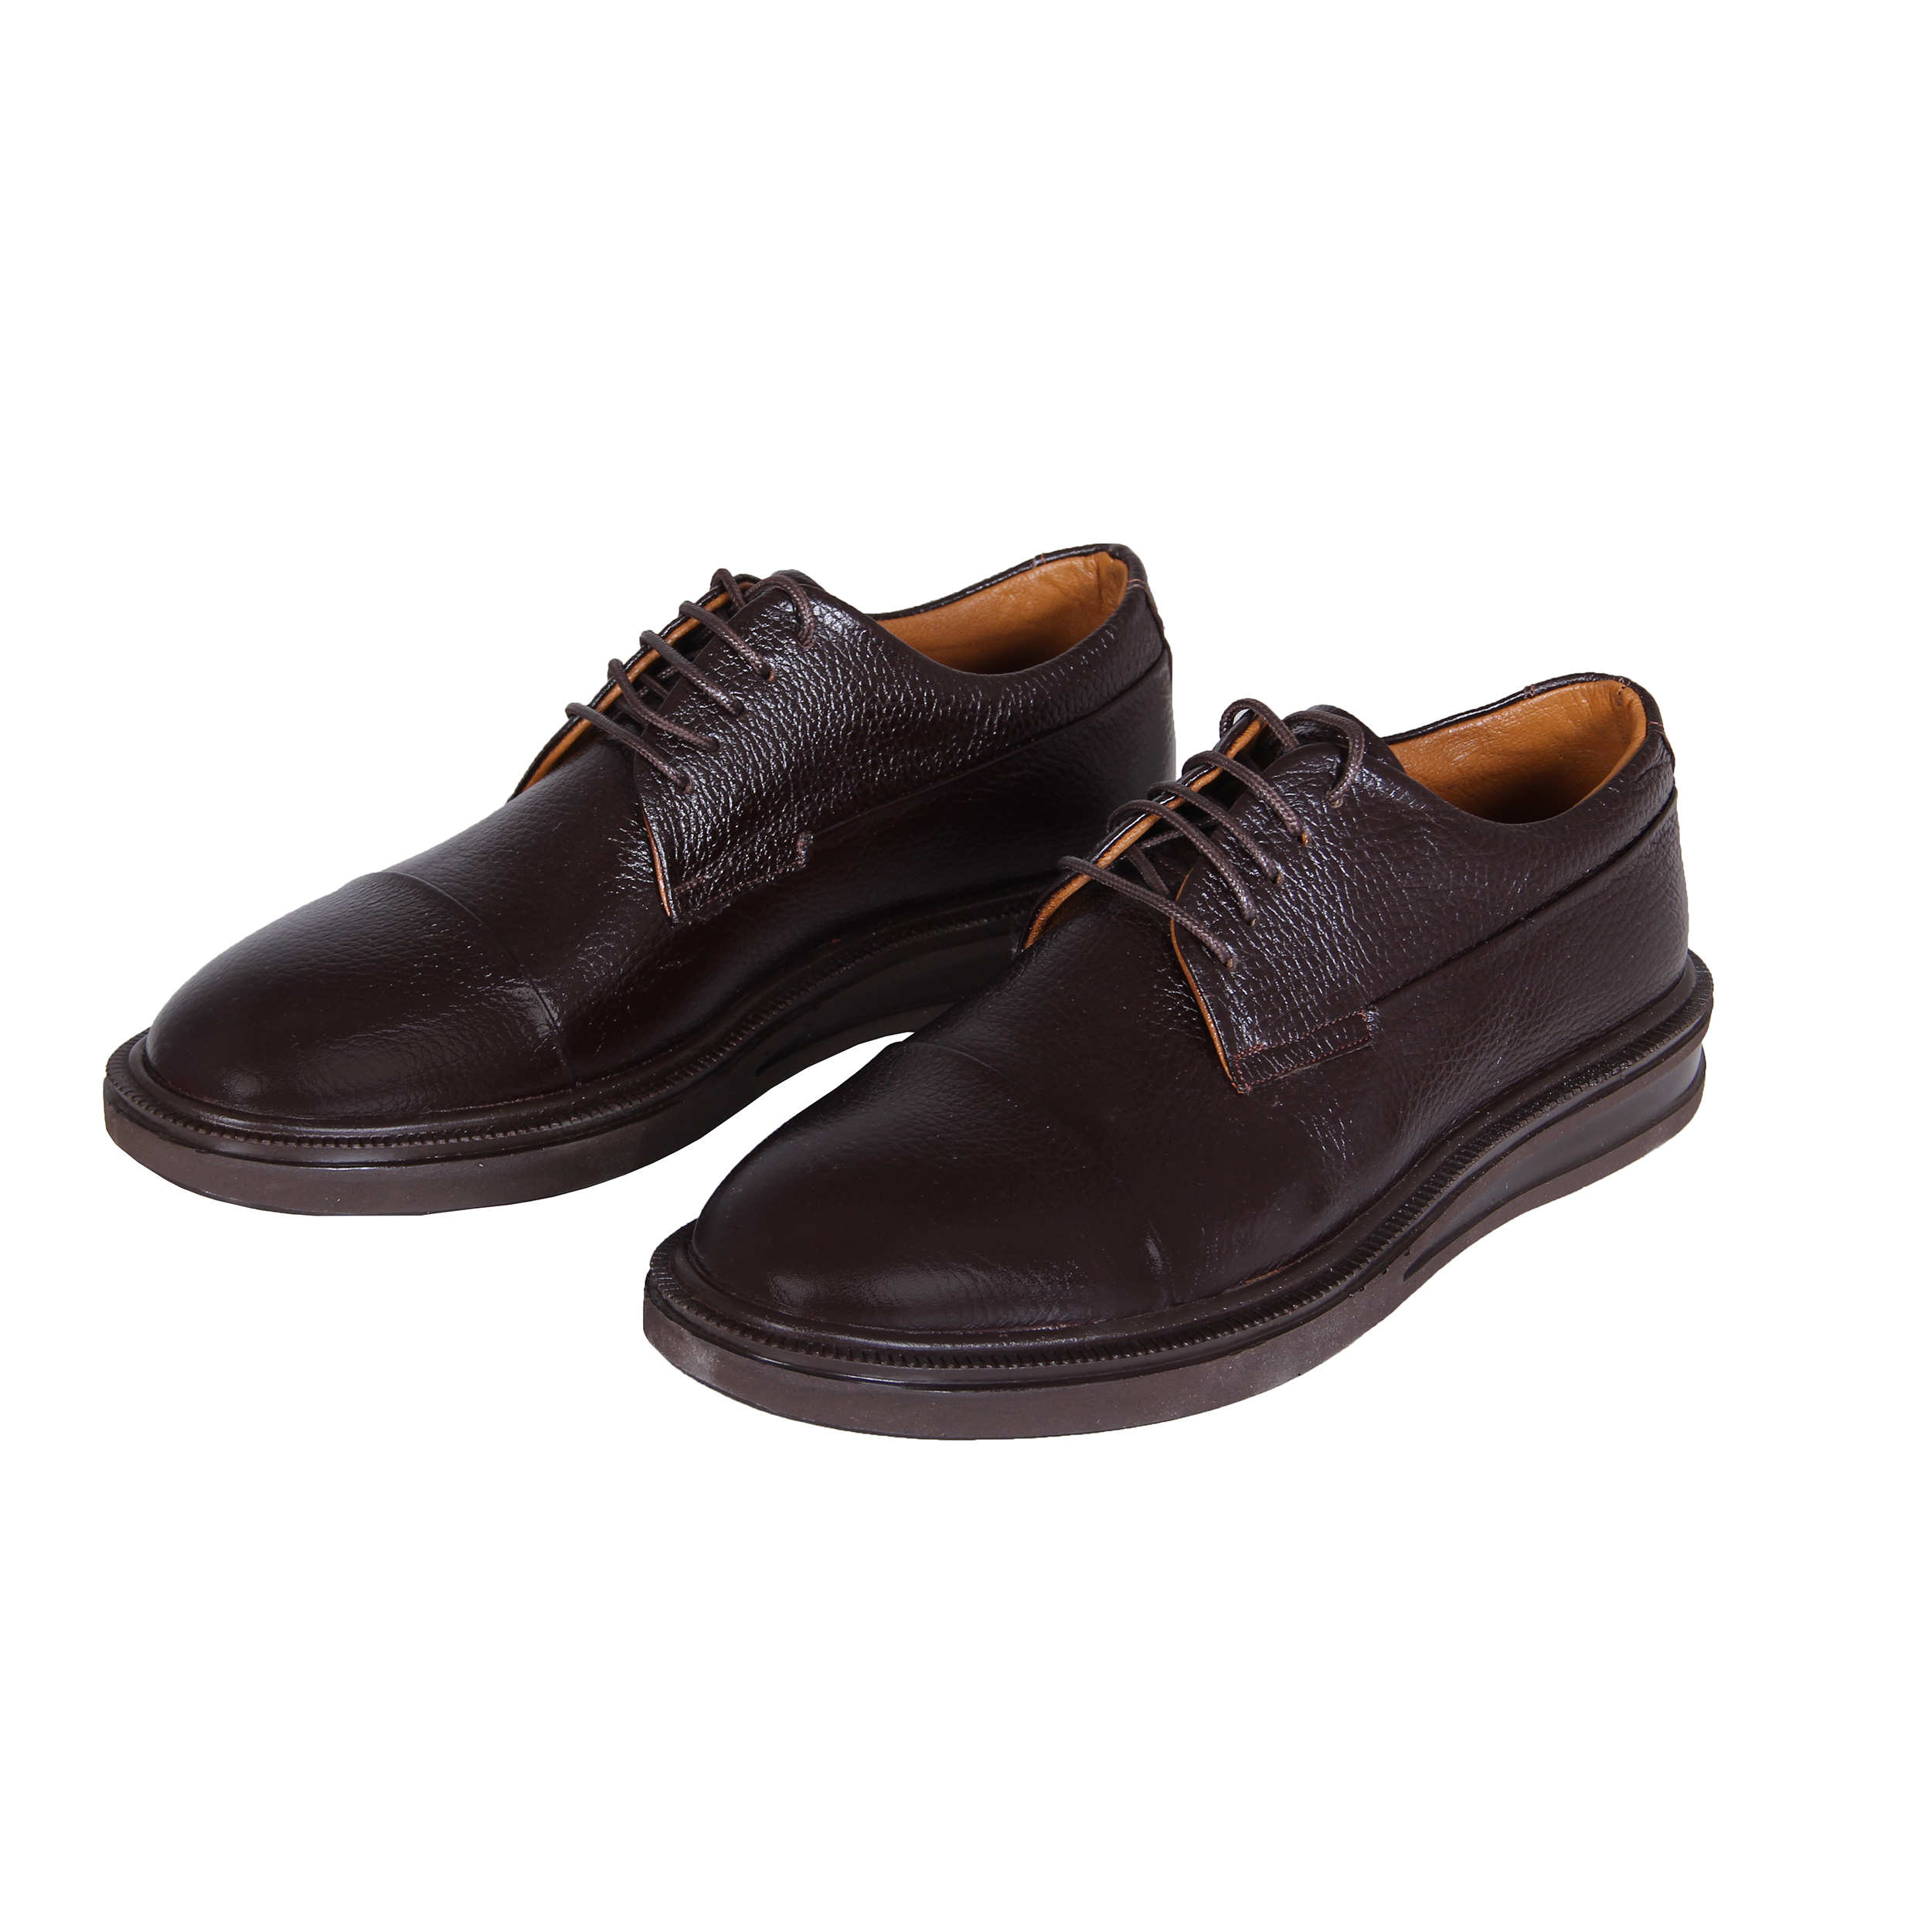 SHAHRECHARM leather men's casual shoes , GH1092-3 Model